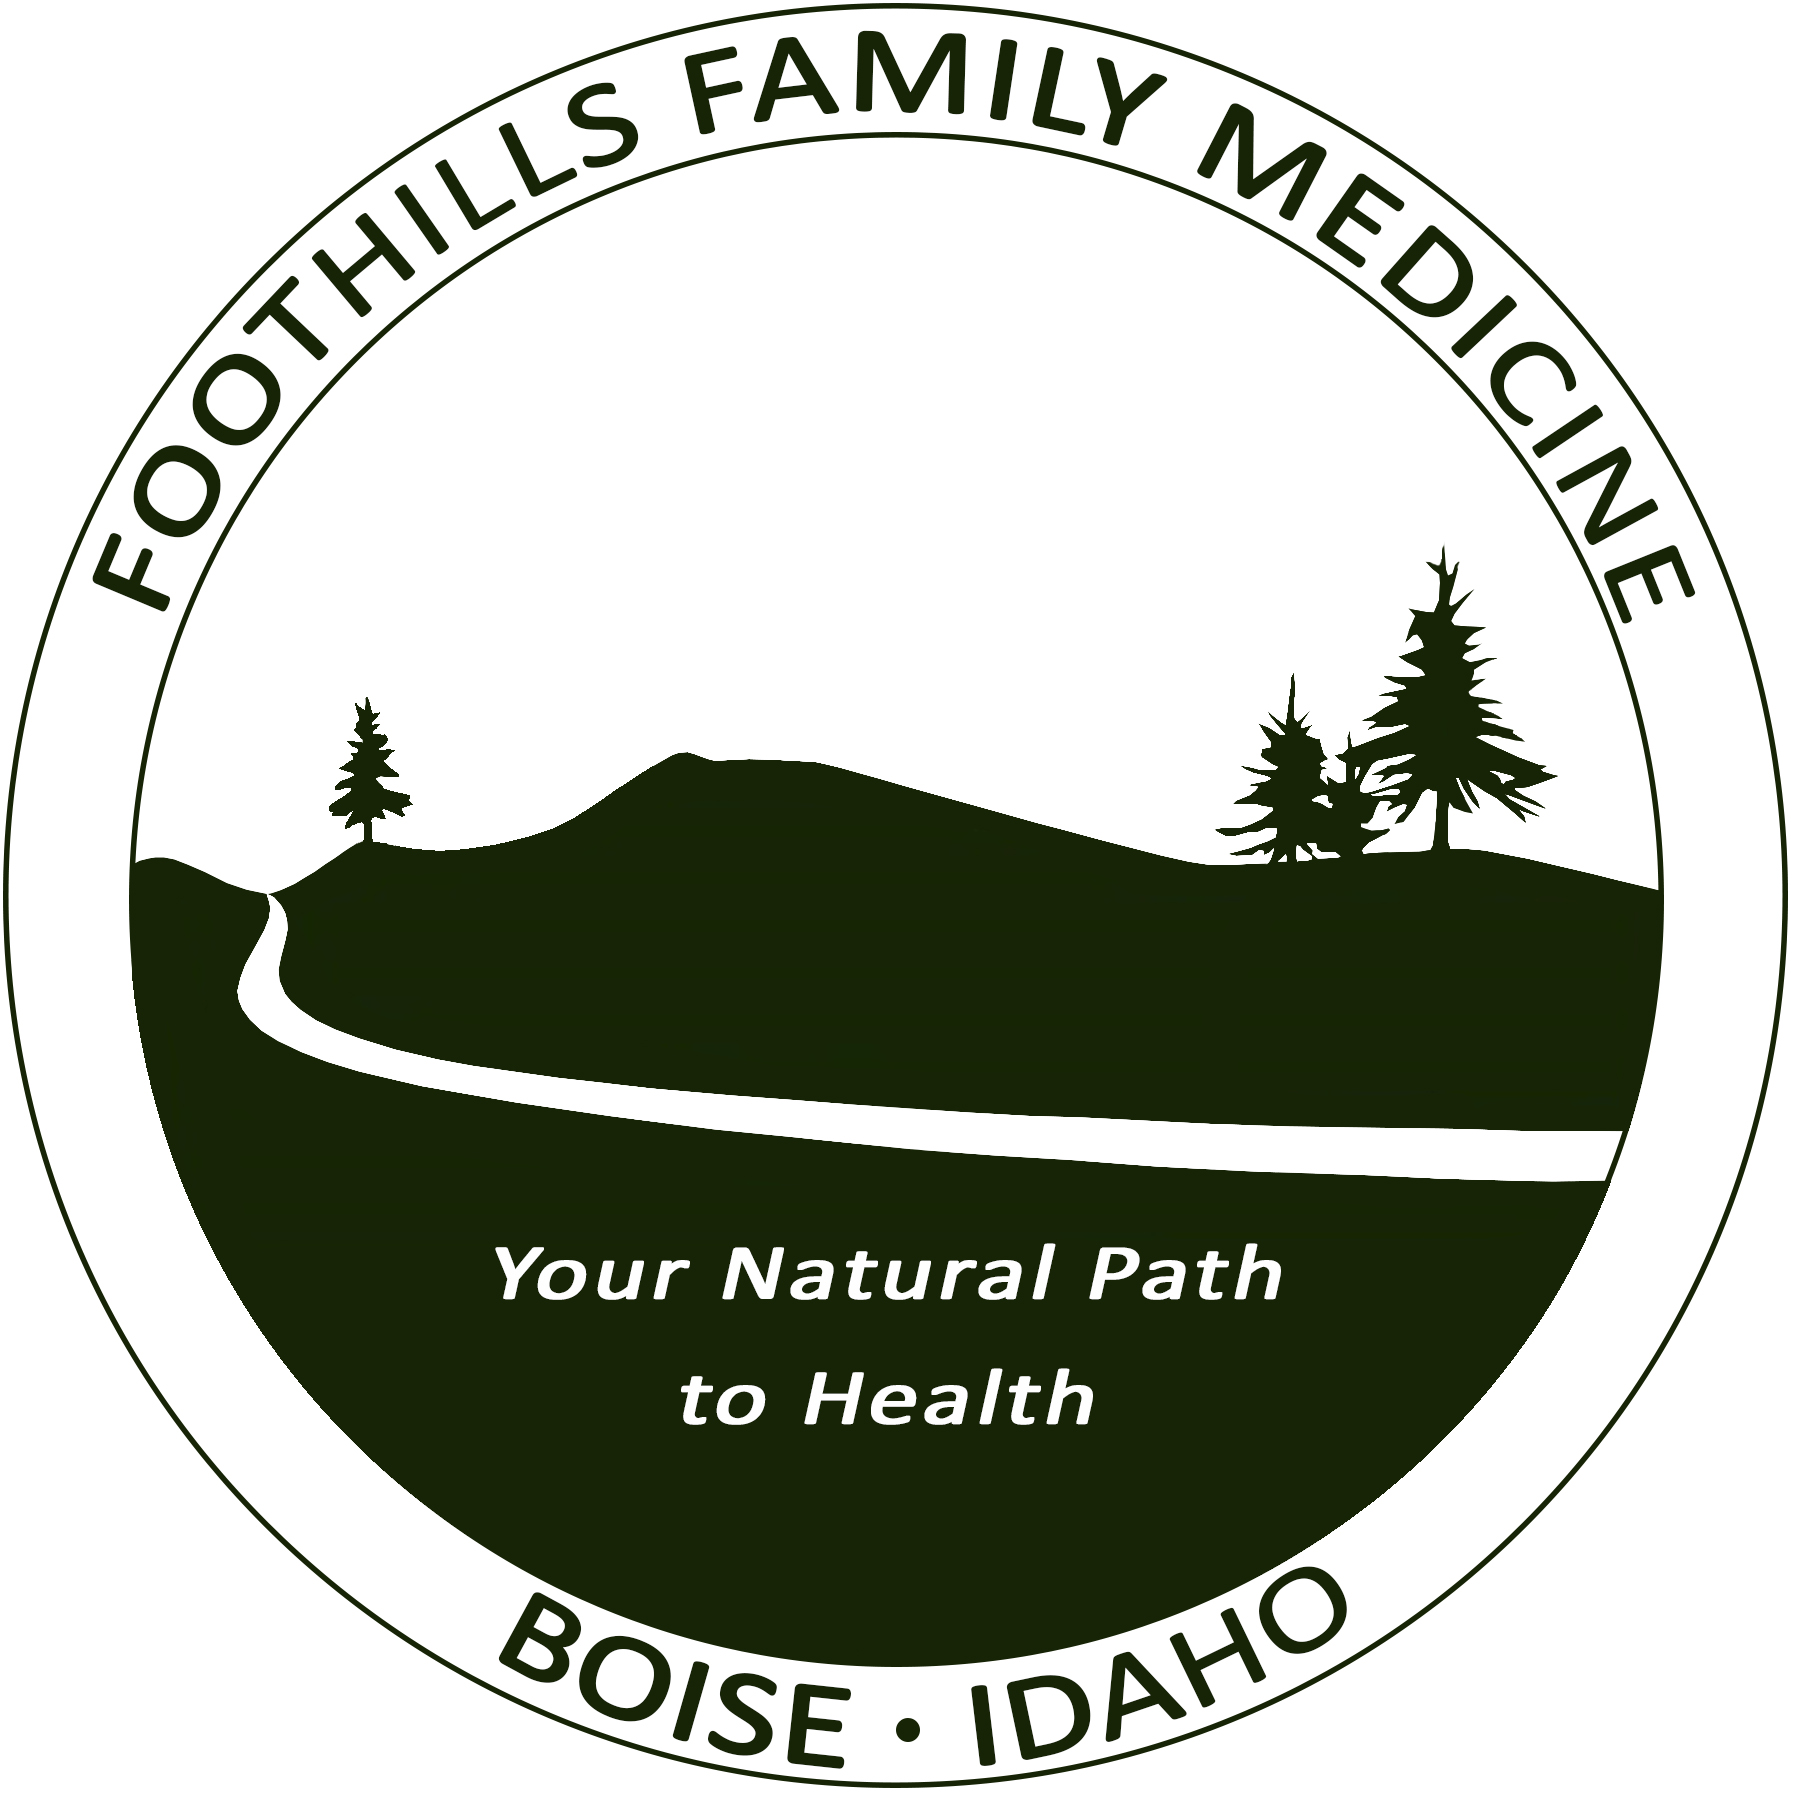 Foothills Family Medicine